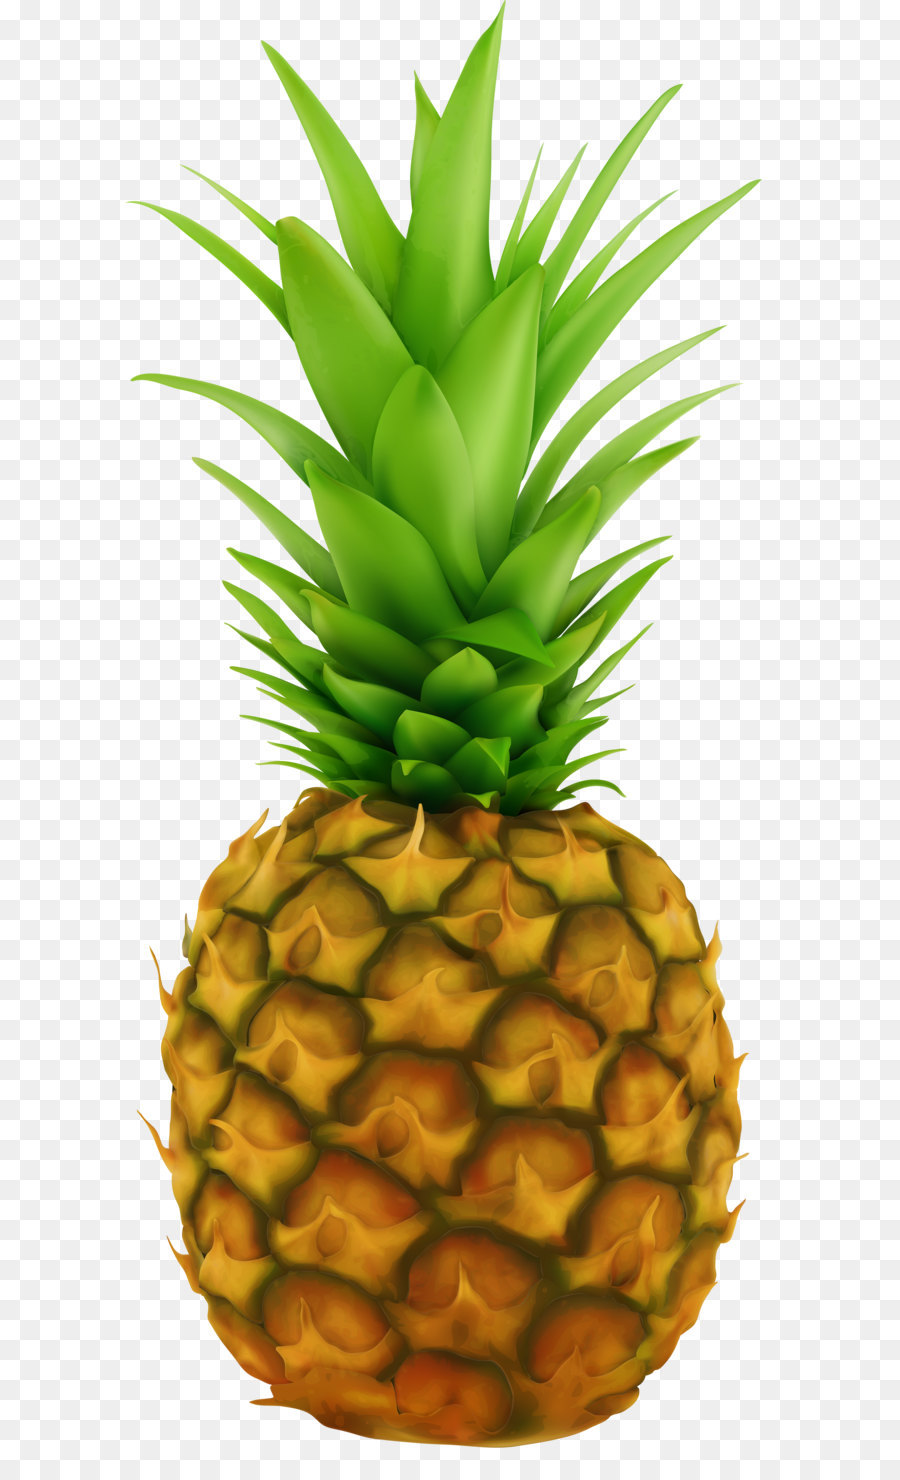 Juice Pineapple Clip art - Pineapple Transparent Clip Art Image png download - 2666*6000 - Free Transparent Pineapple png Download.